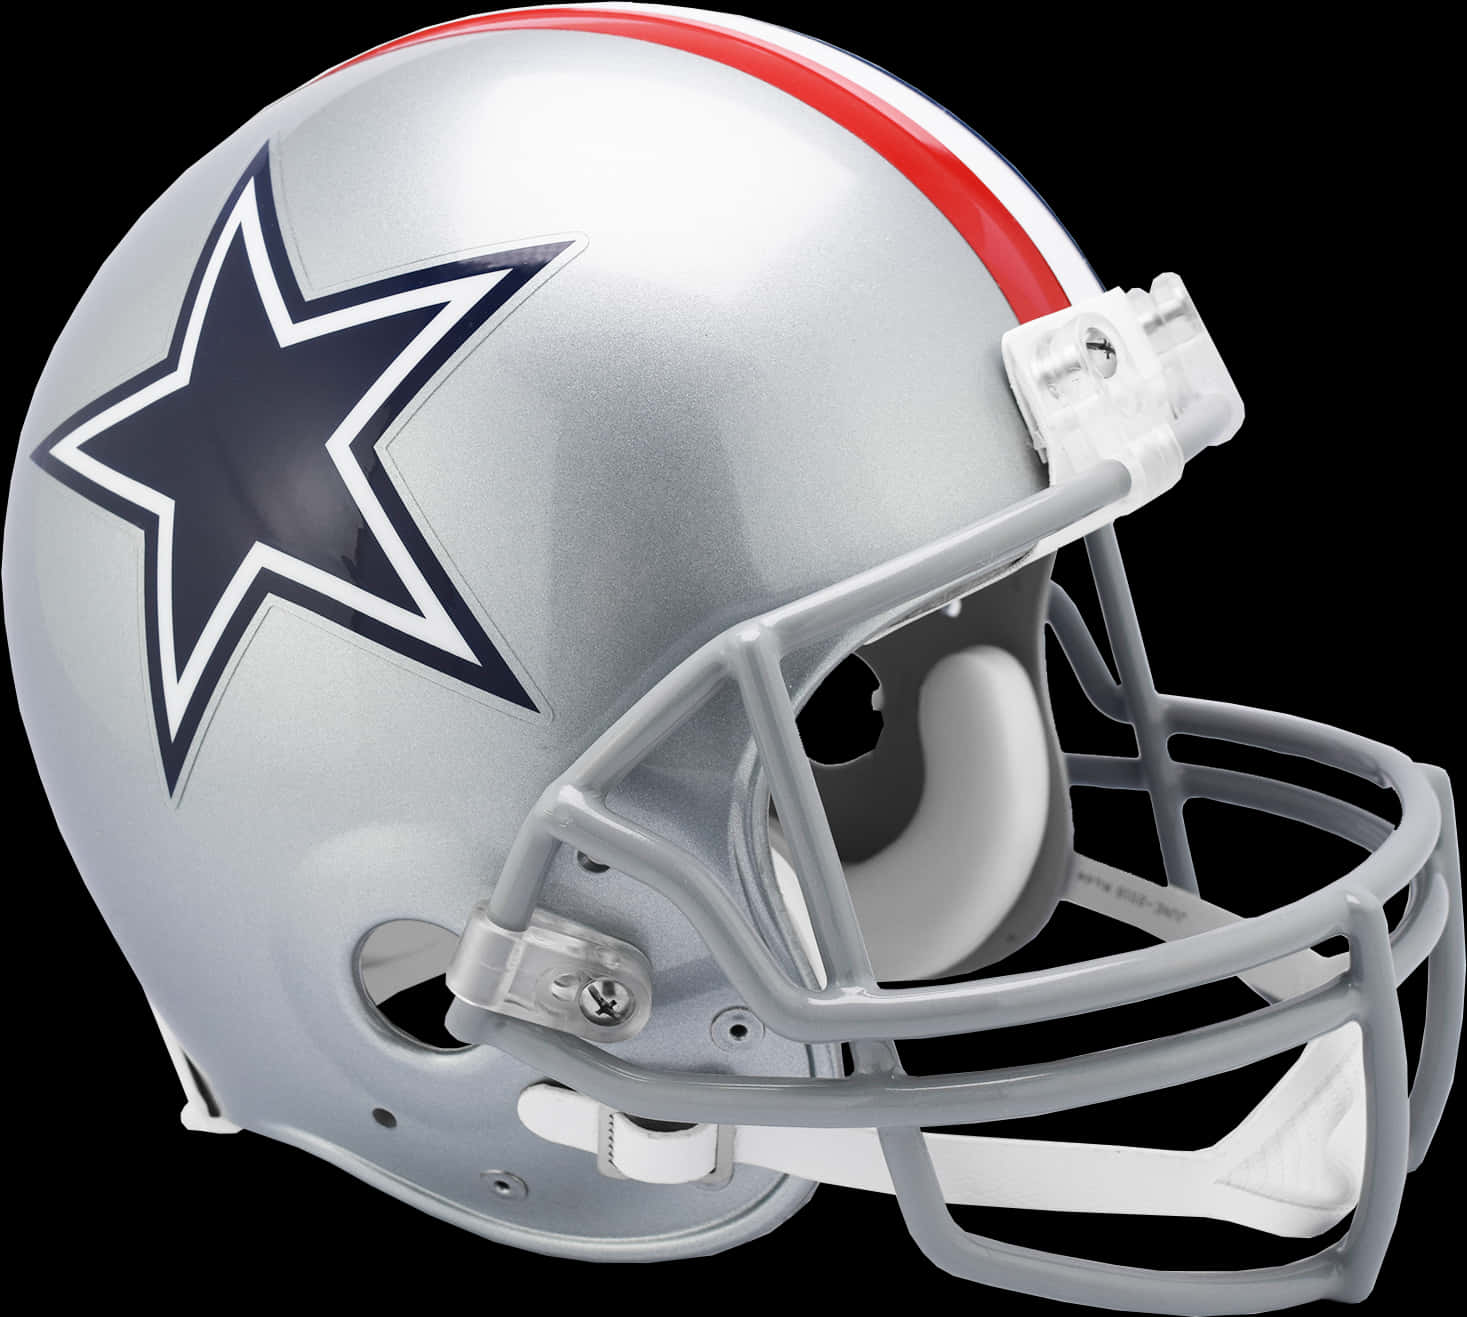 A Silver And Blue Football Helmet